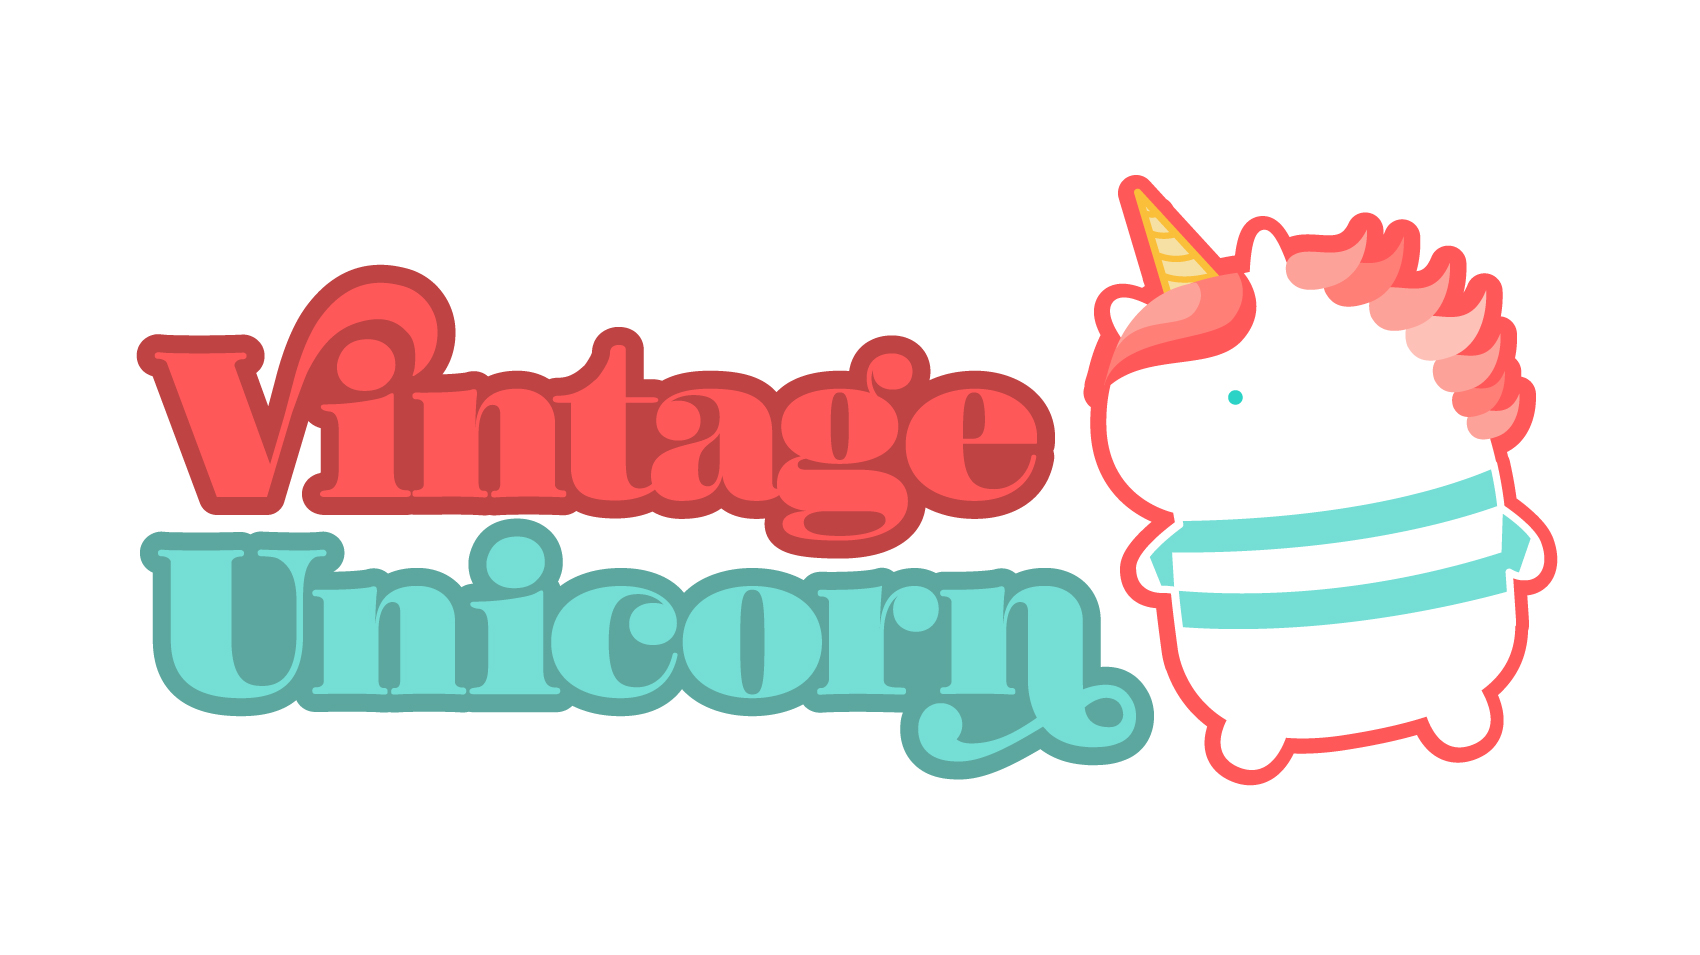 Vintage Unicorn Self promo logo design